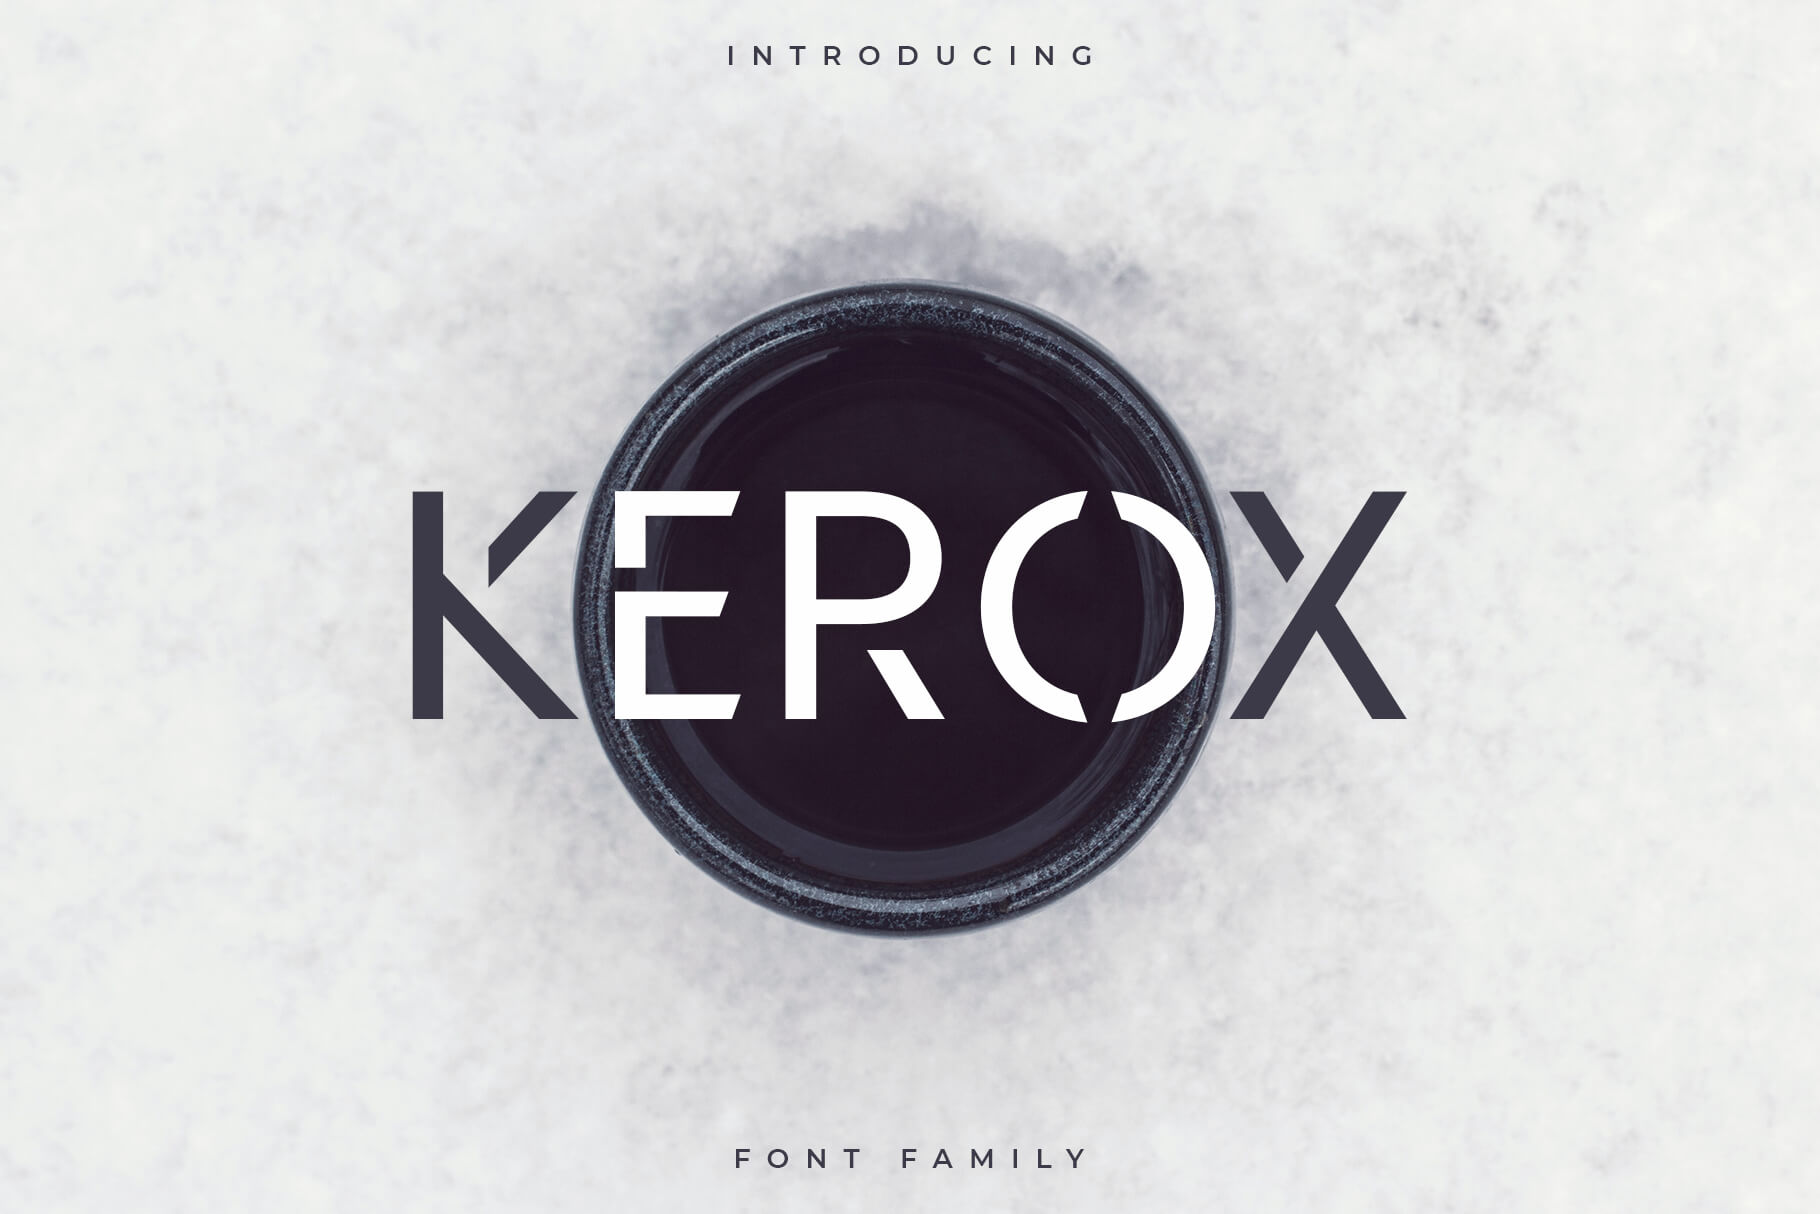 Kerox Free Font Family